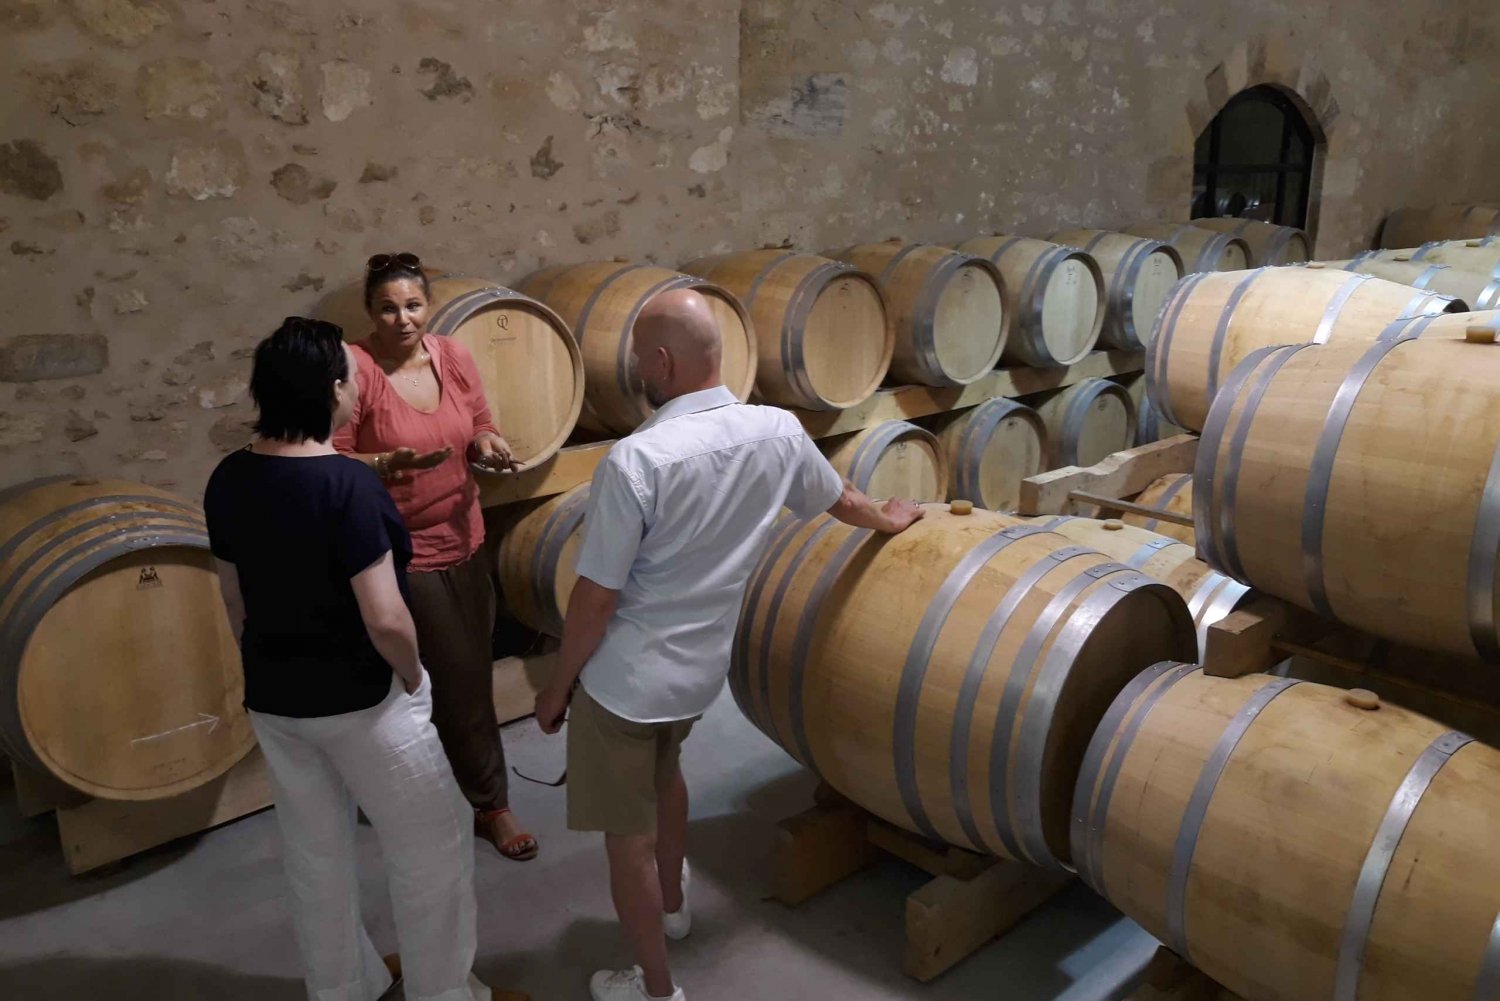 From Bordeaux: Saint-Emilion Wine Tour in a Sidecar